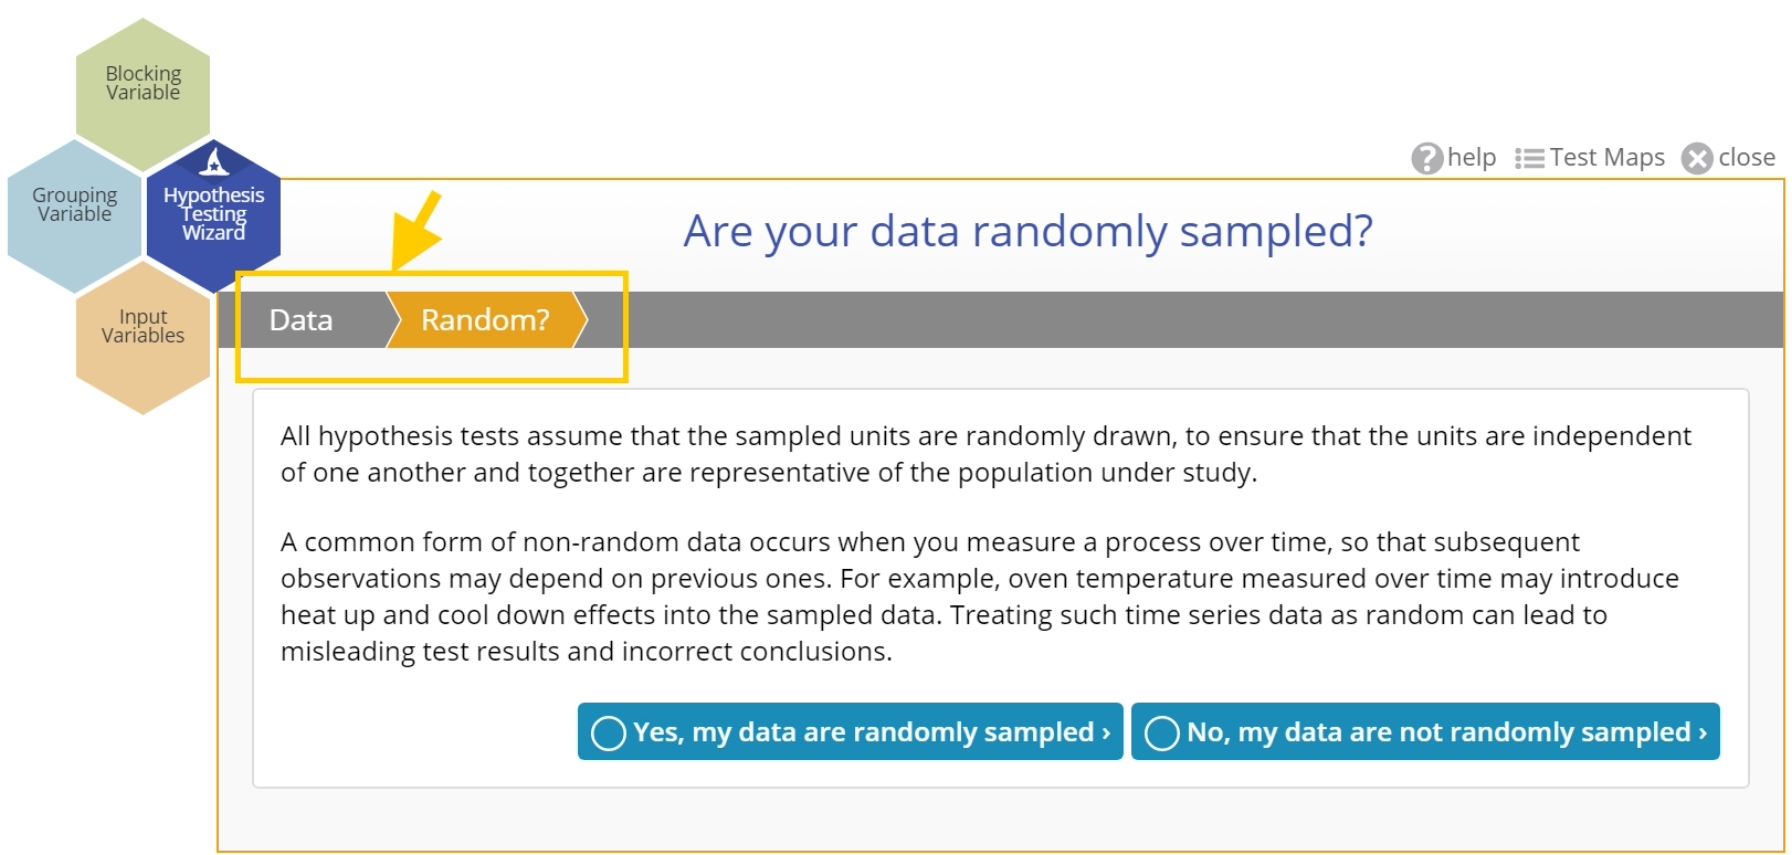 Pop up asking if data is randomly sampled.